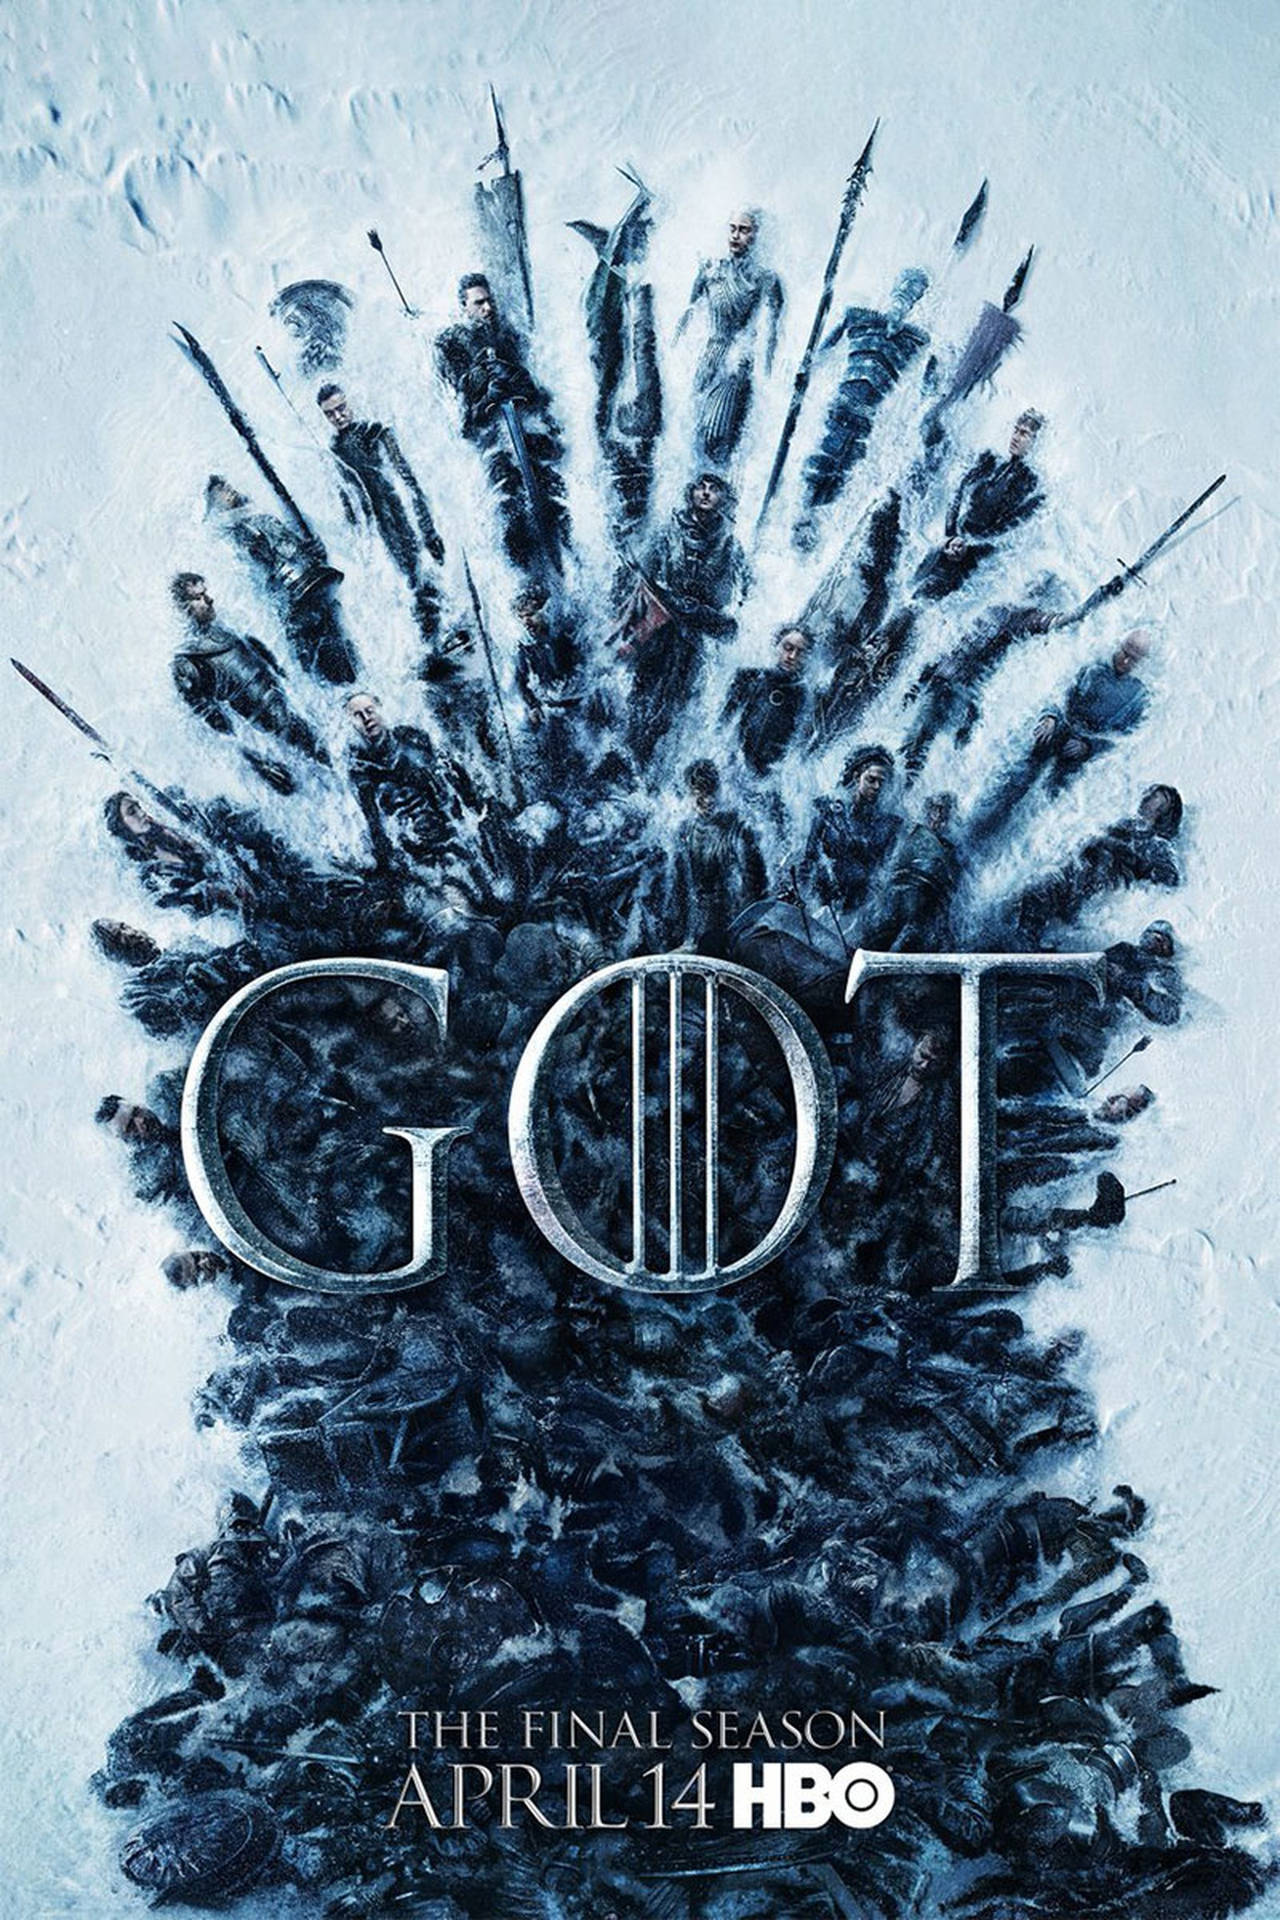 HBO GOT Cast Poster Background